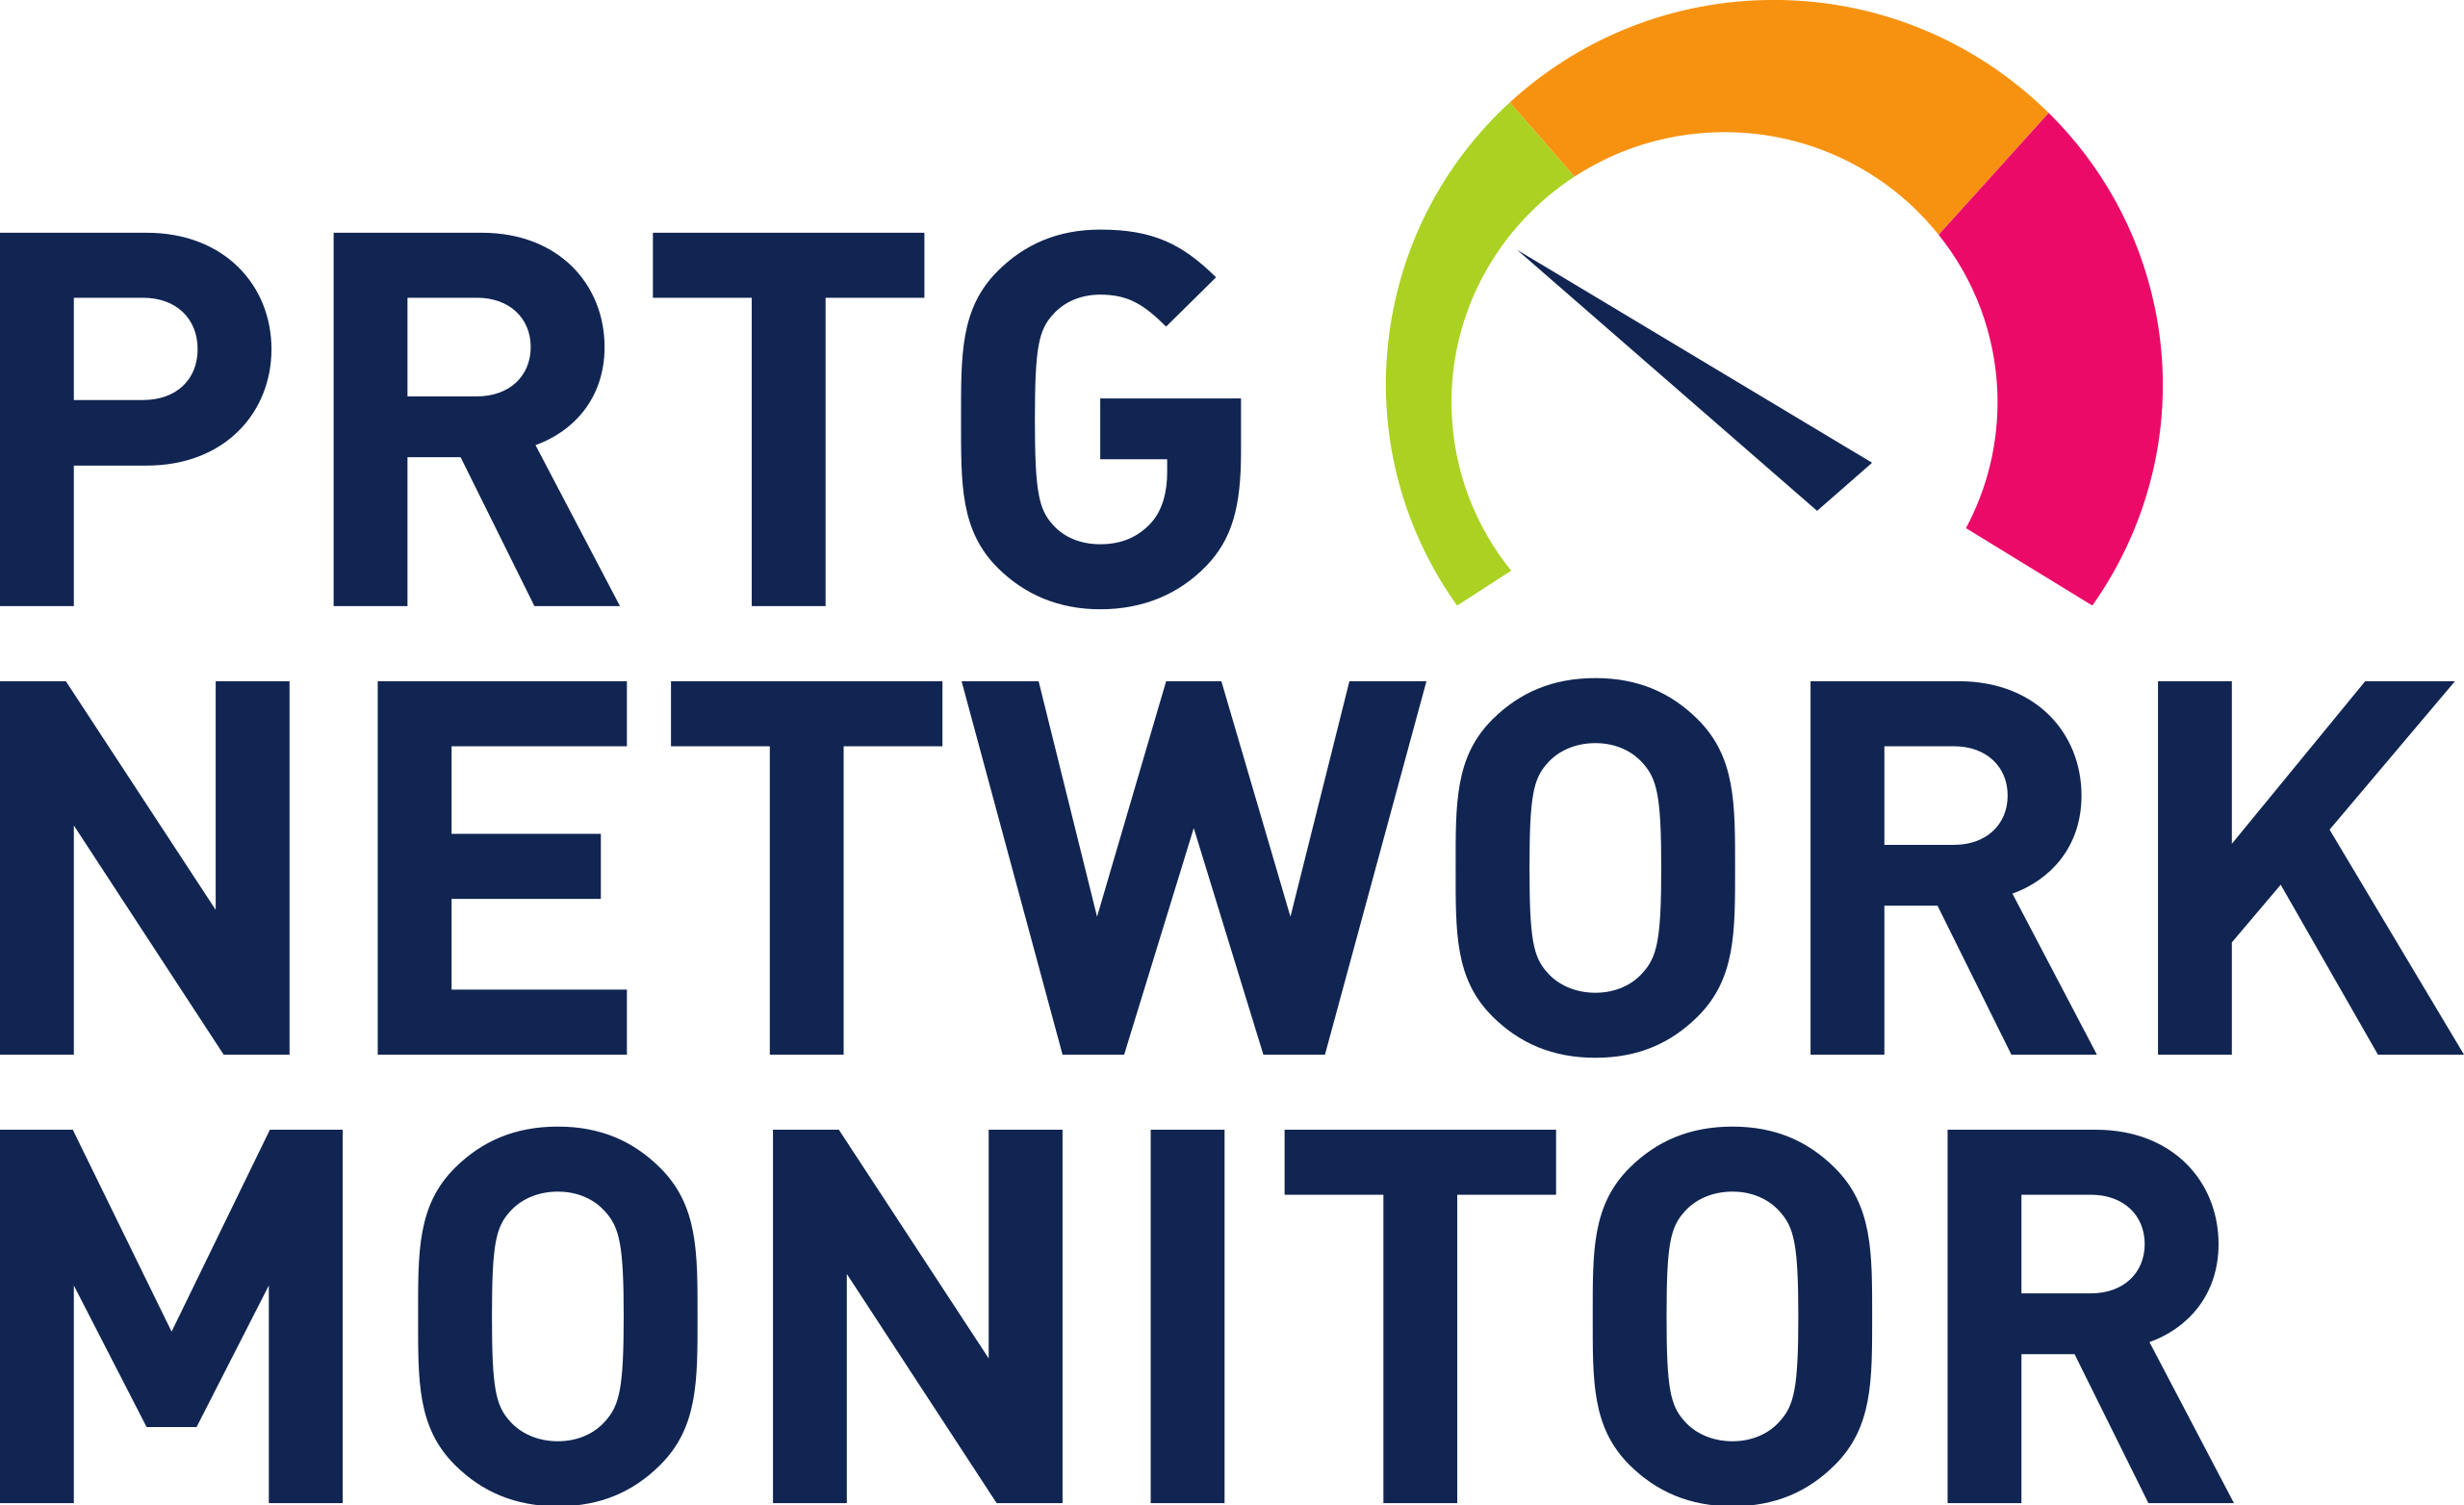 Prtg network monitoring. PRTG Network Monitor. Логотип PRTG. Paessler PRTG. Paessler лого.